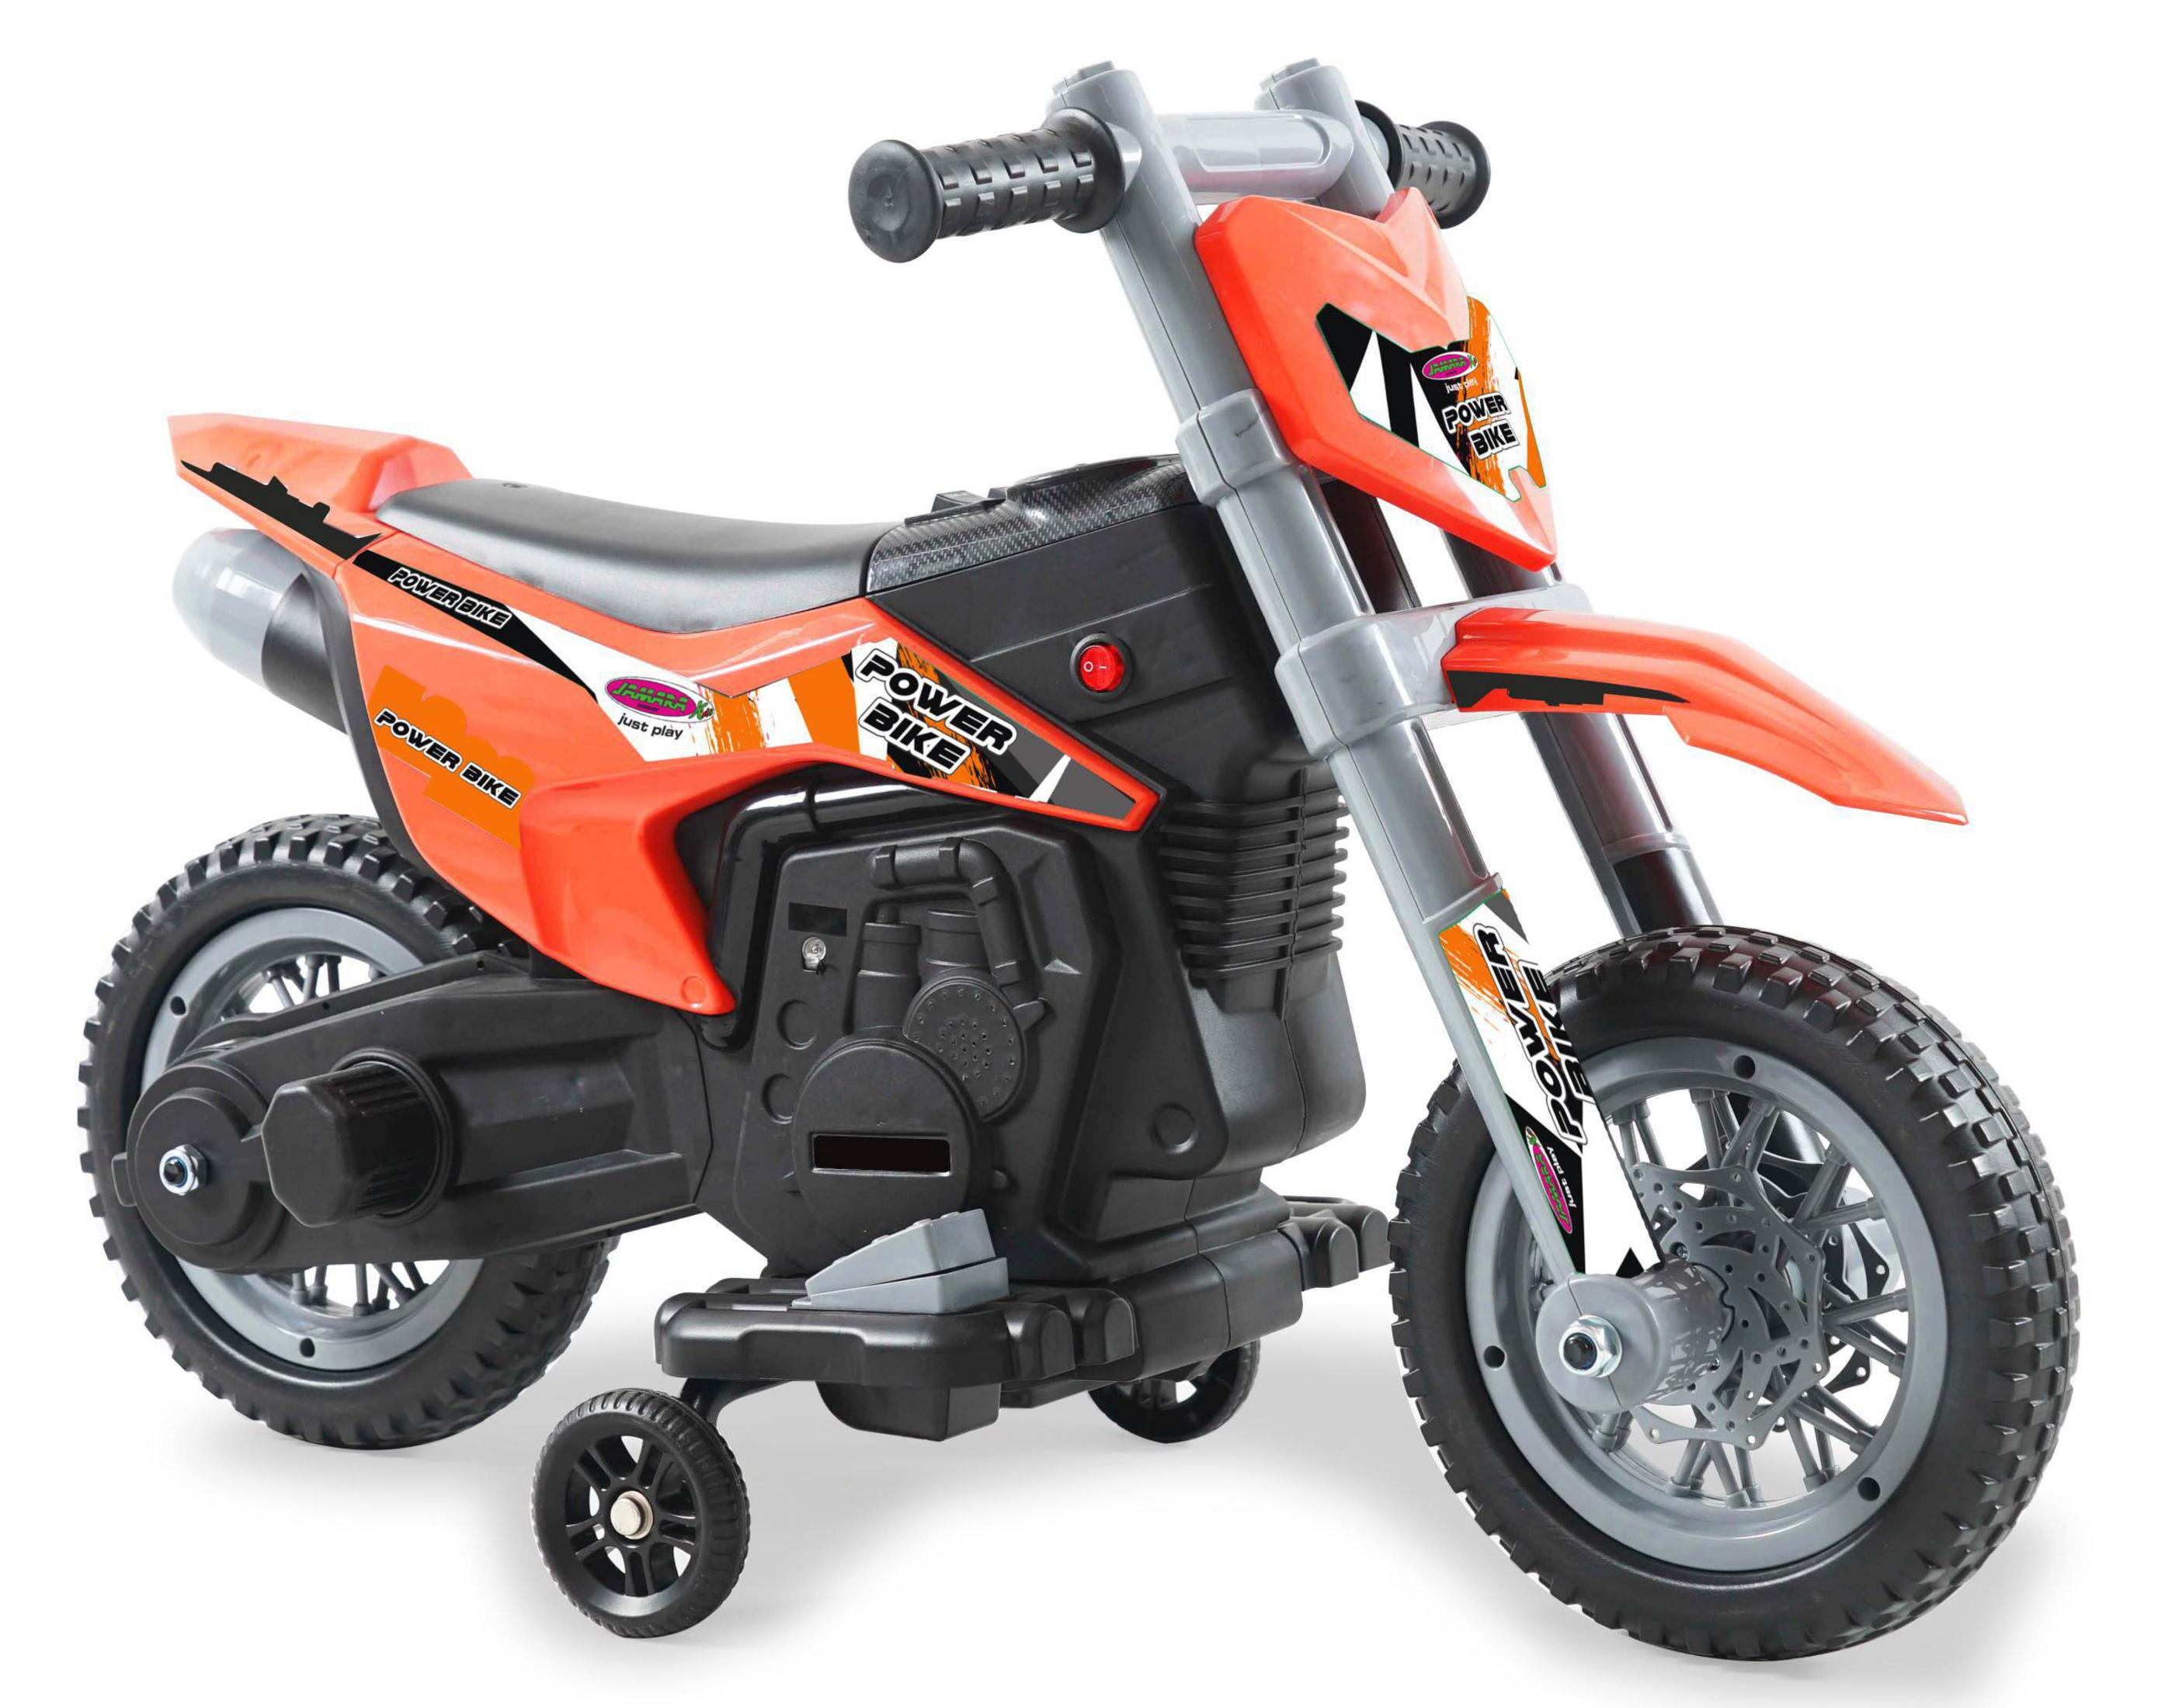 MOTORRAD Ride-On JAMARA ORANGE 460679 Orange RIDE-ON POWER BIKE Kinderfahrzeug, 6V